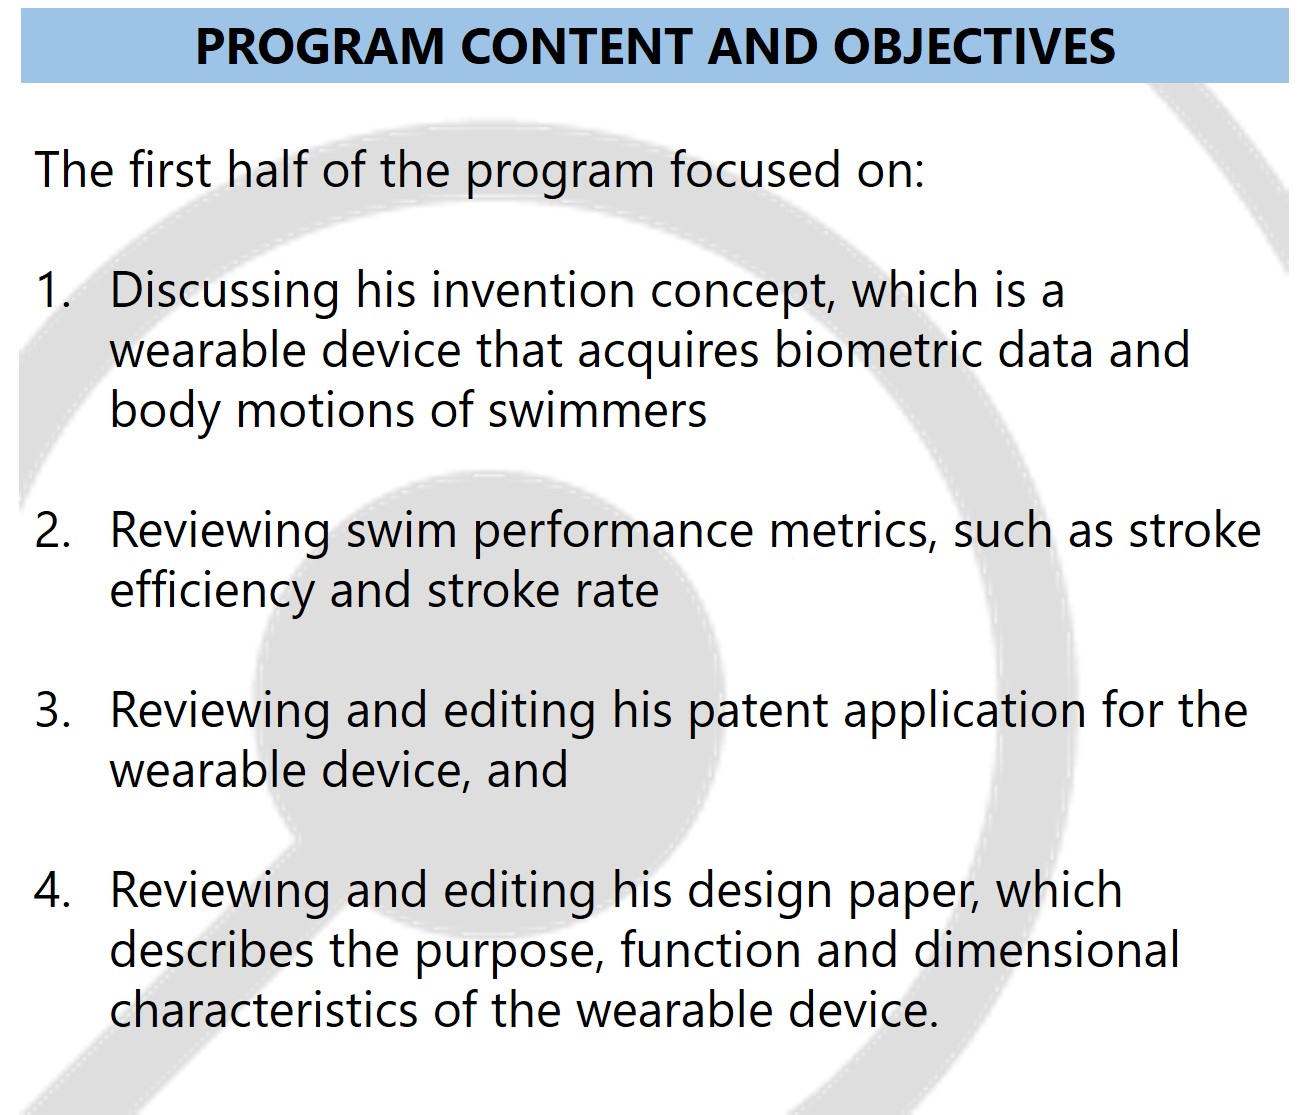 Program objectives outlined